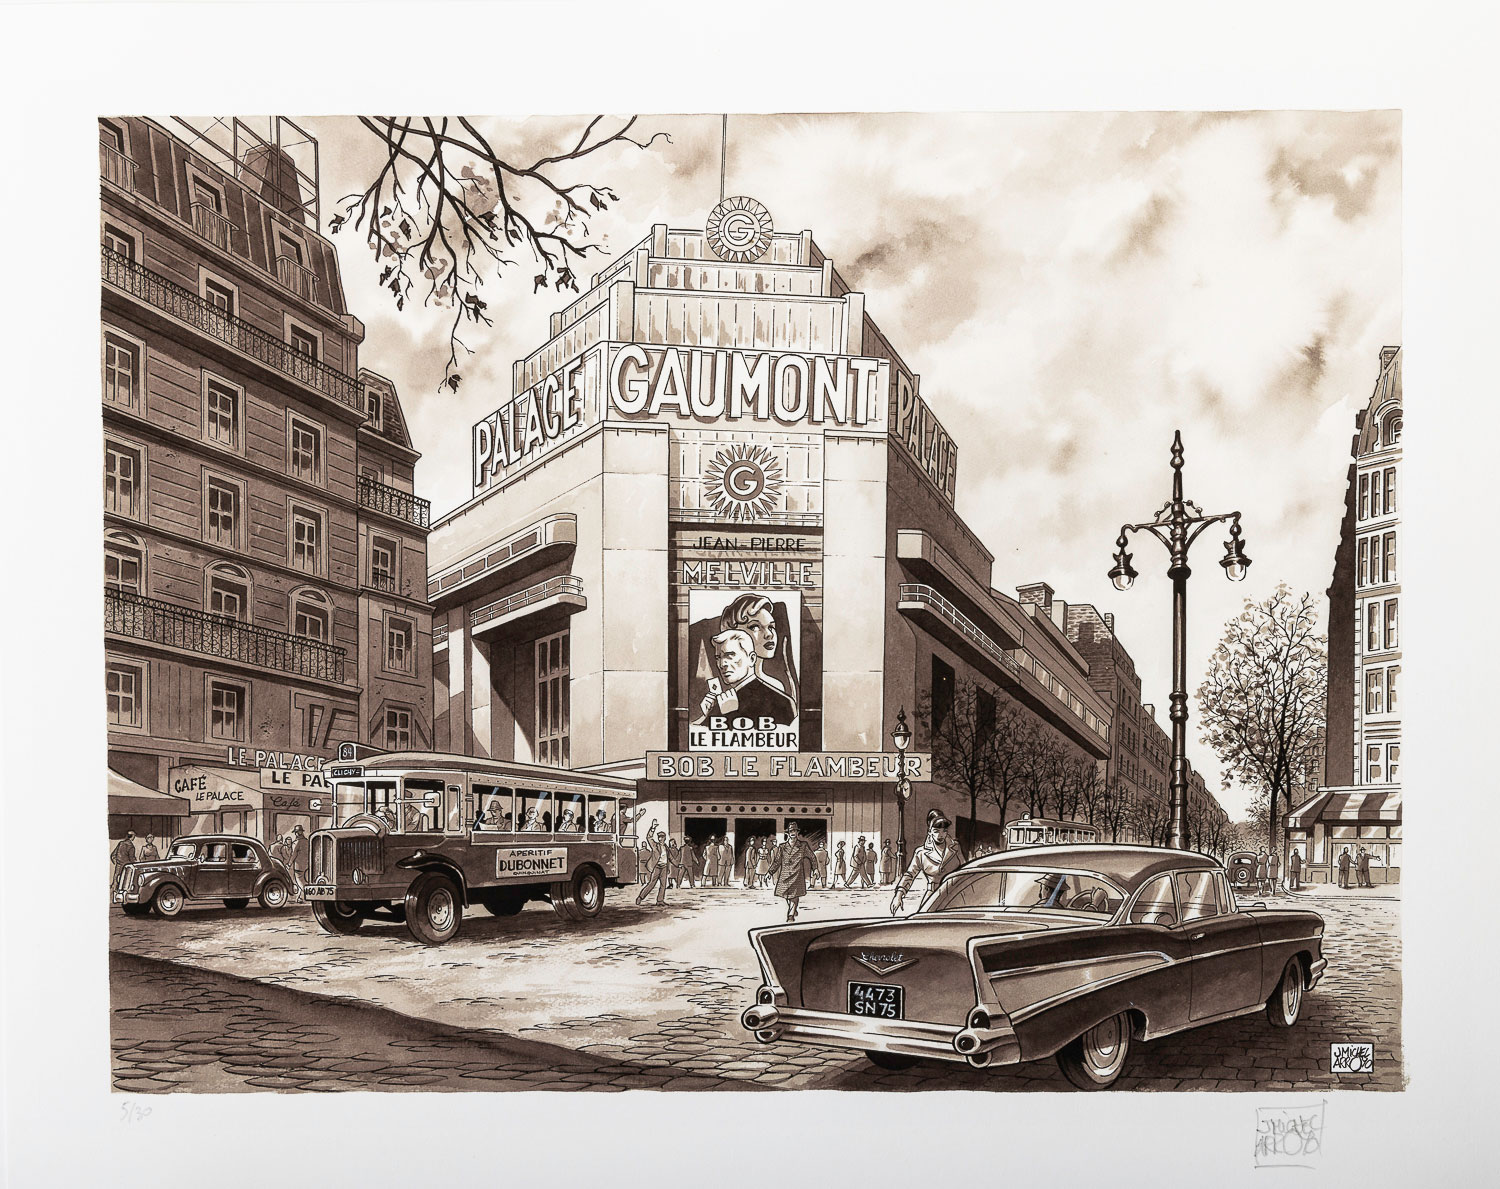 Stampa pigmentaria firmata Jean-Michel Arroyo : Gaumont Palace